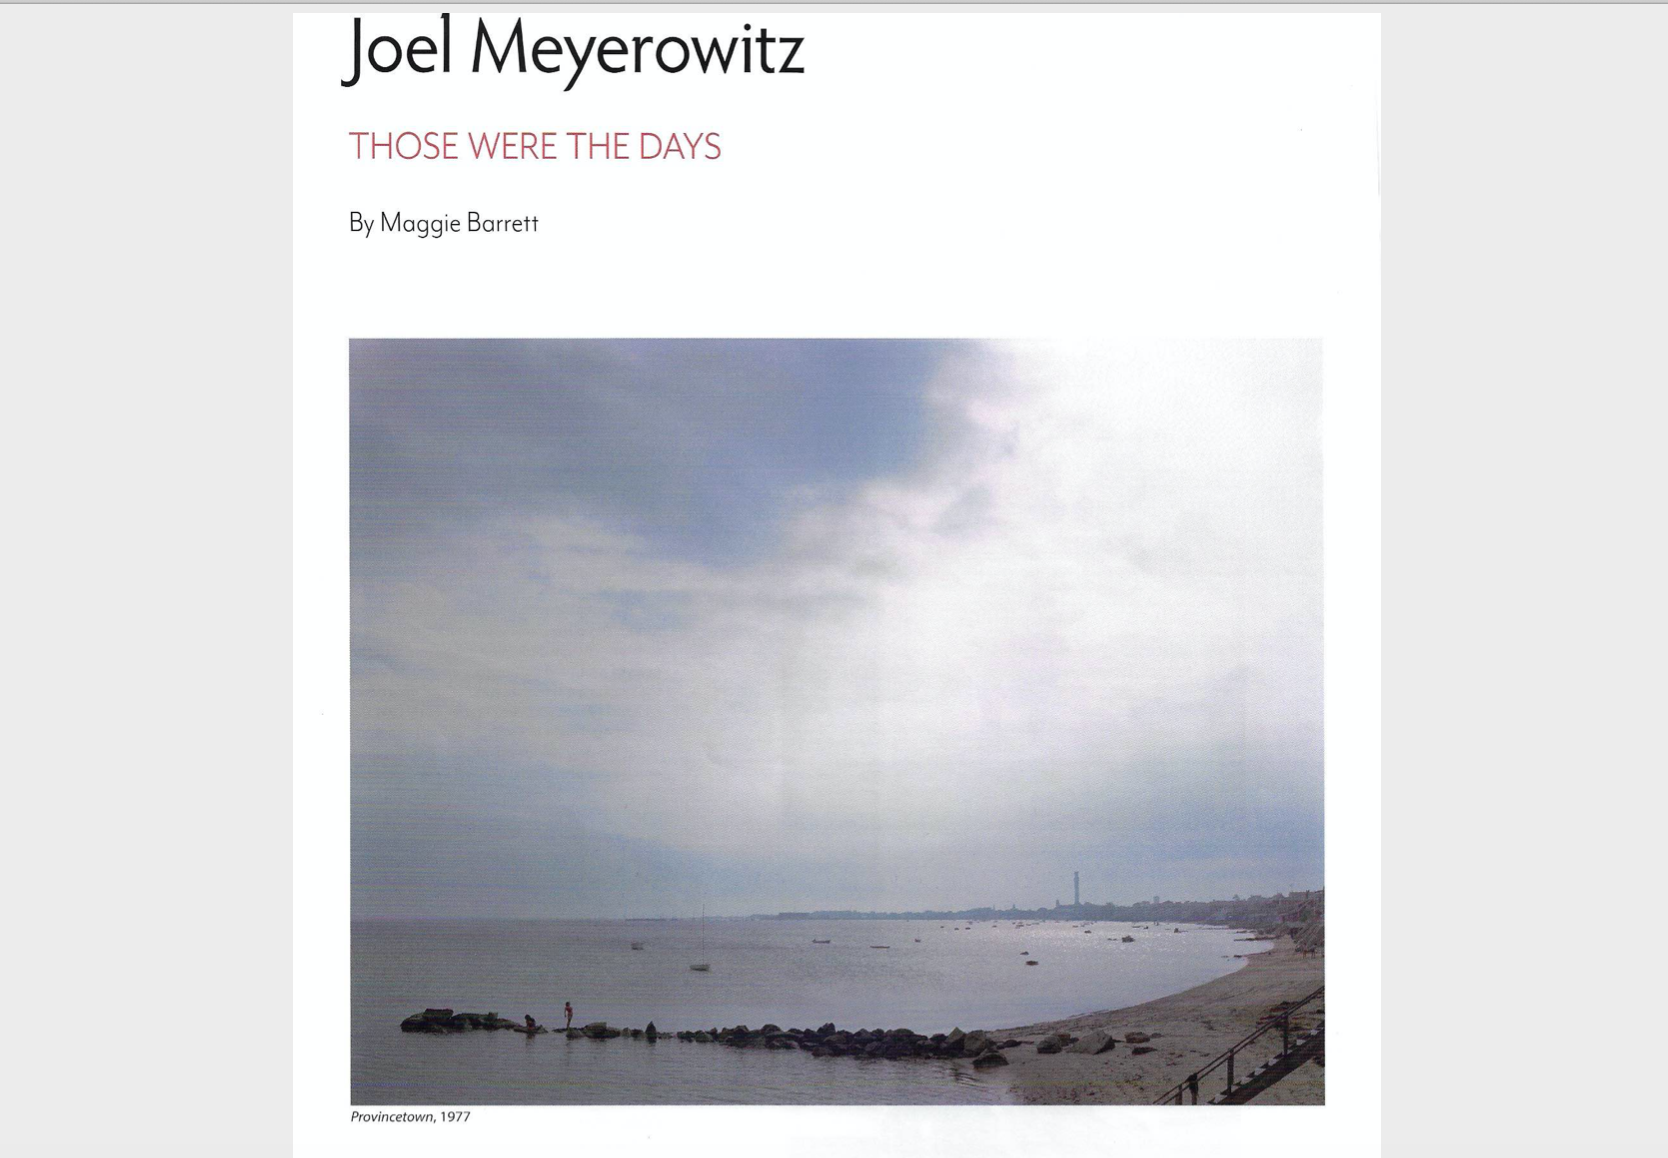 Provincetown Arts, Joel Meyerowitz, Those Were the Days